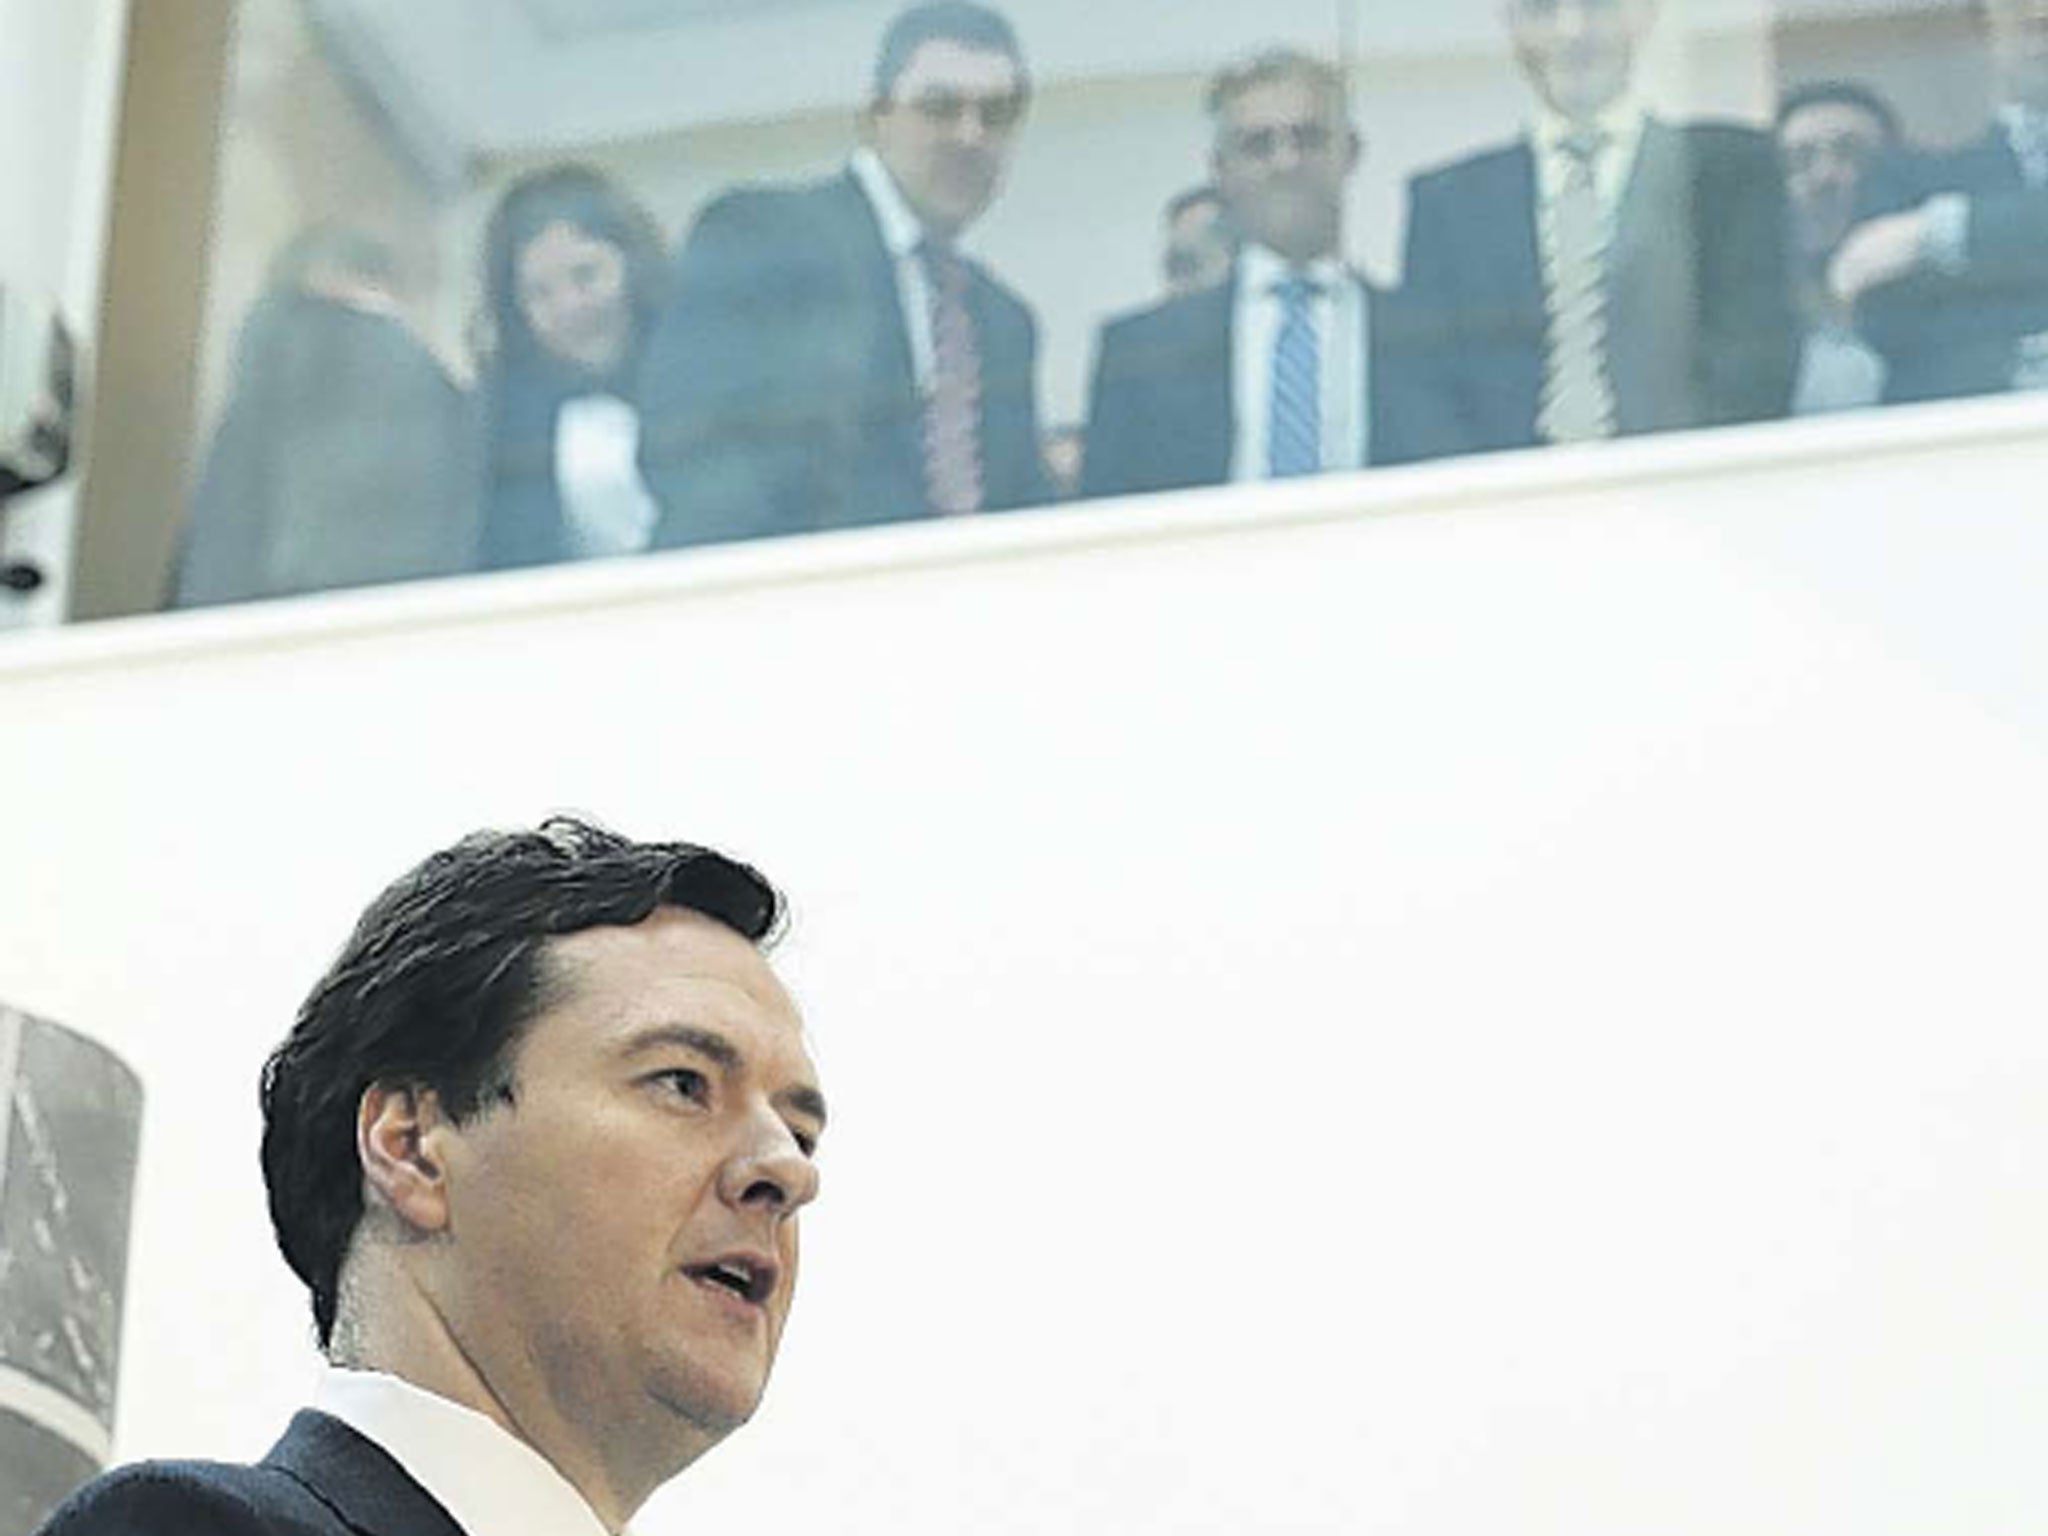 George Osborne speaking at JPMorgan in Bournemouth yesterday